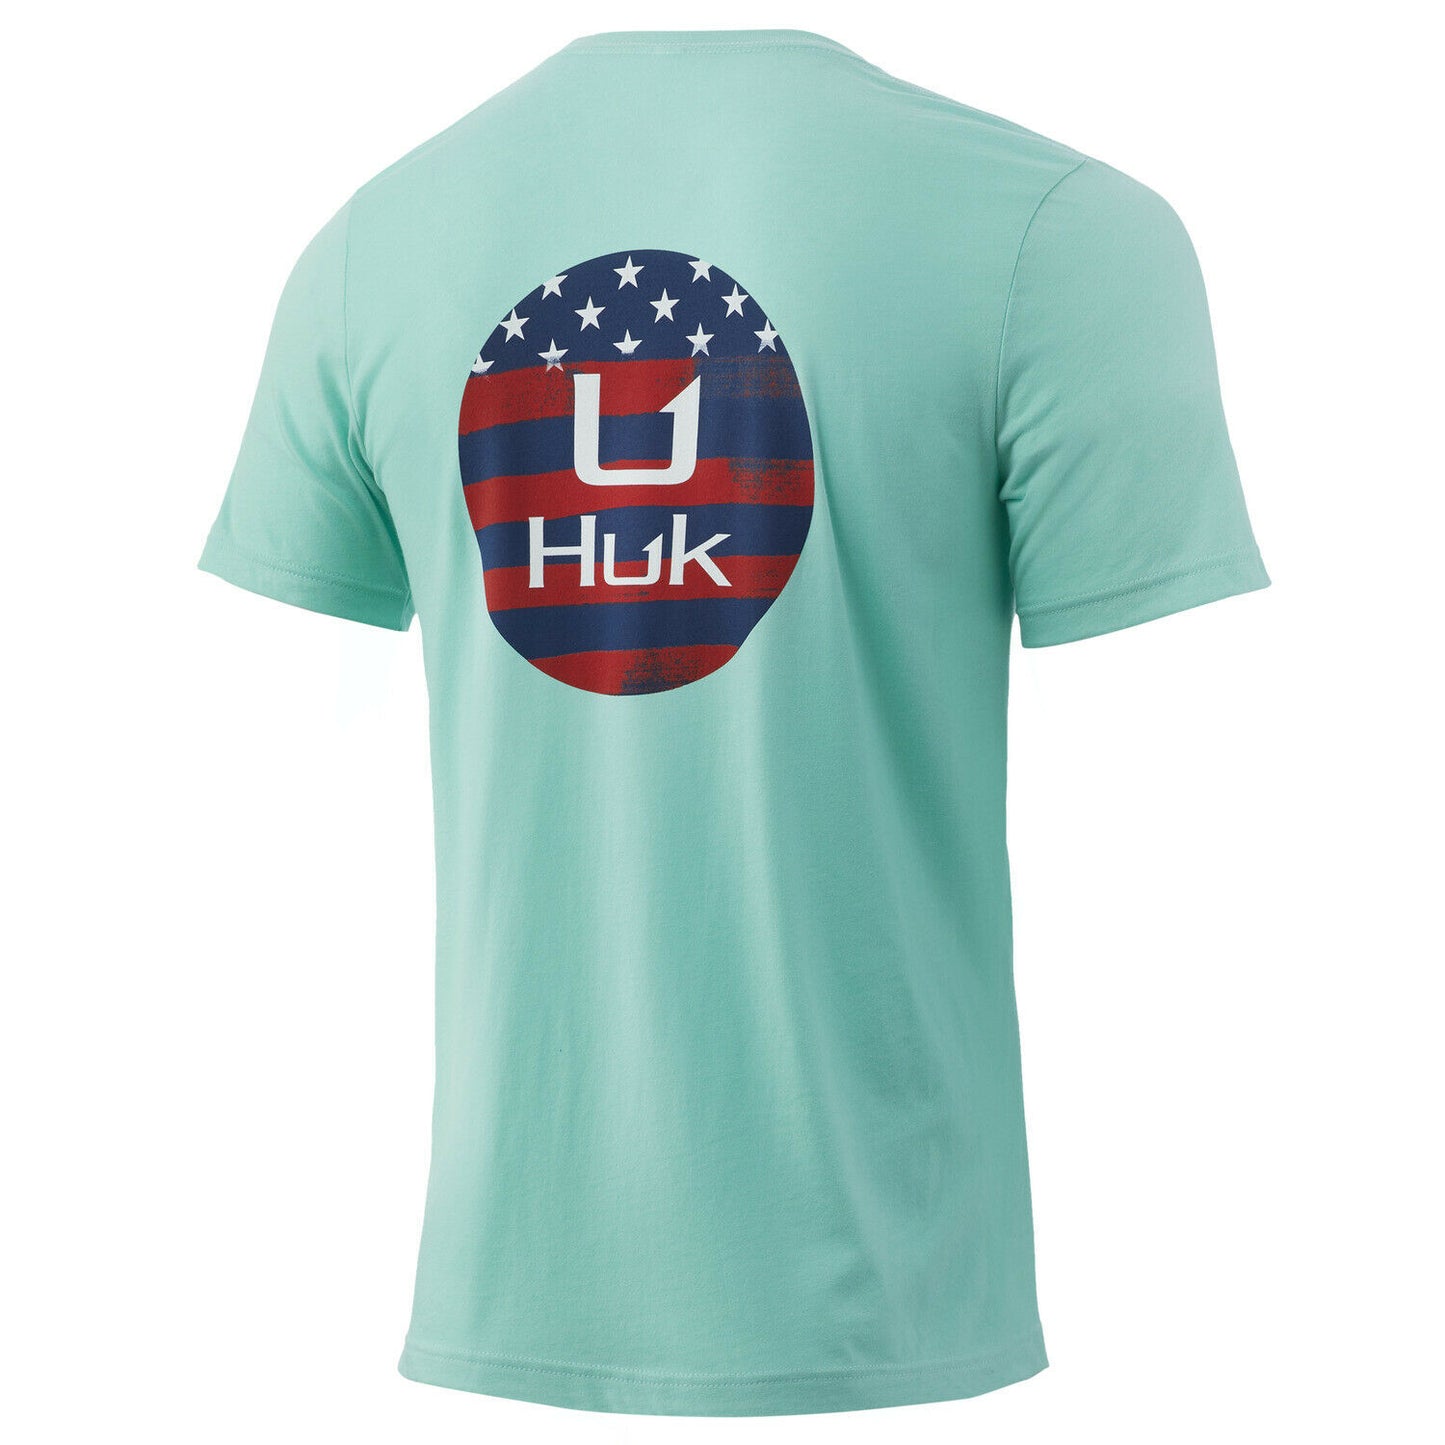 Huk - KC American Pride Lightweight Tee H1000261 - Choose Size / Color